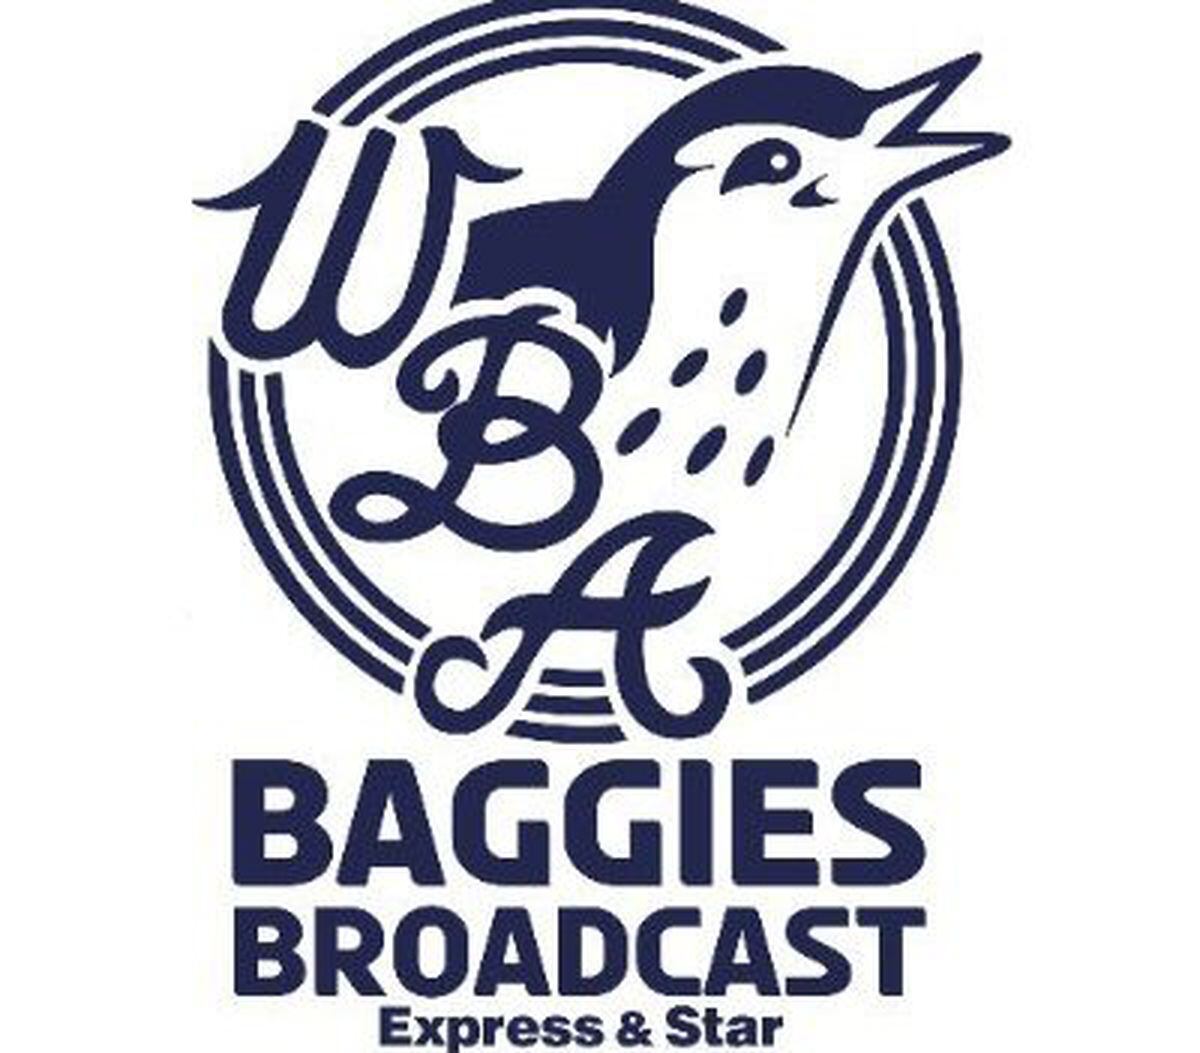 Baggies Broadcast with Jonny Drury & Lewis Cox